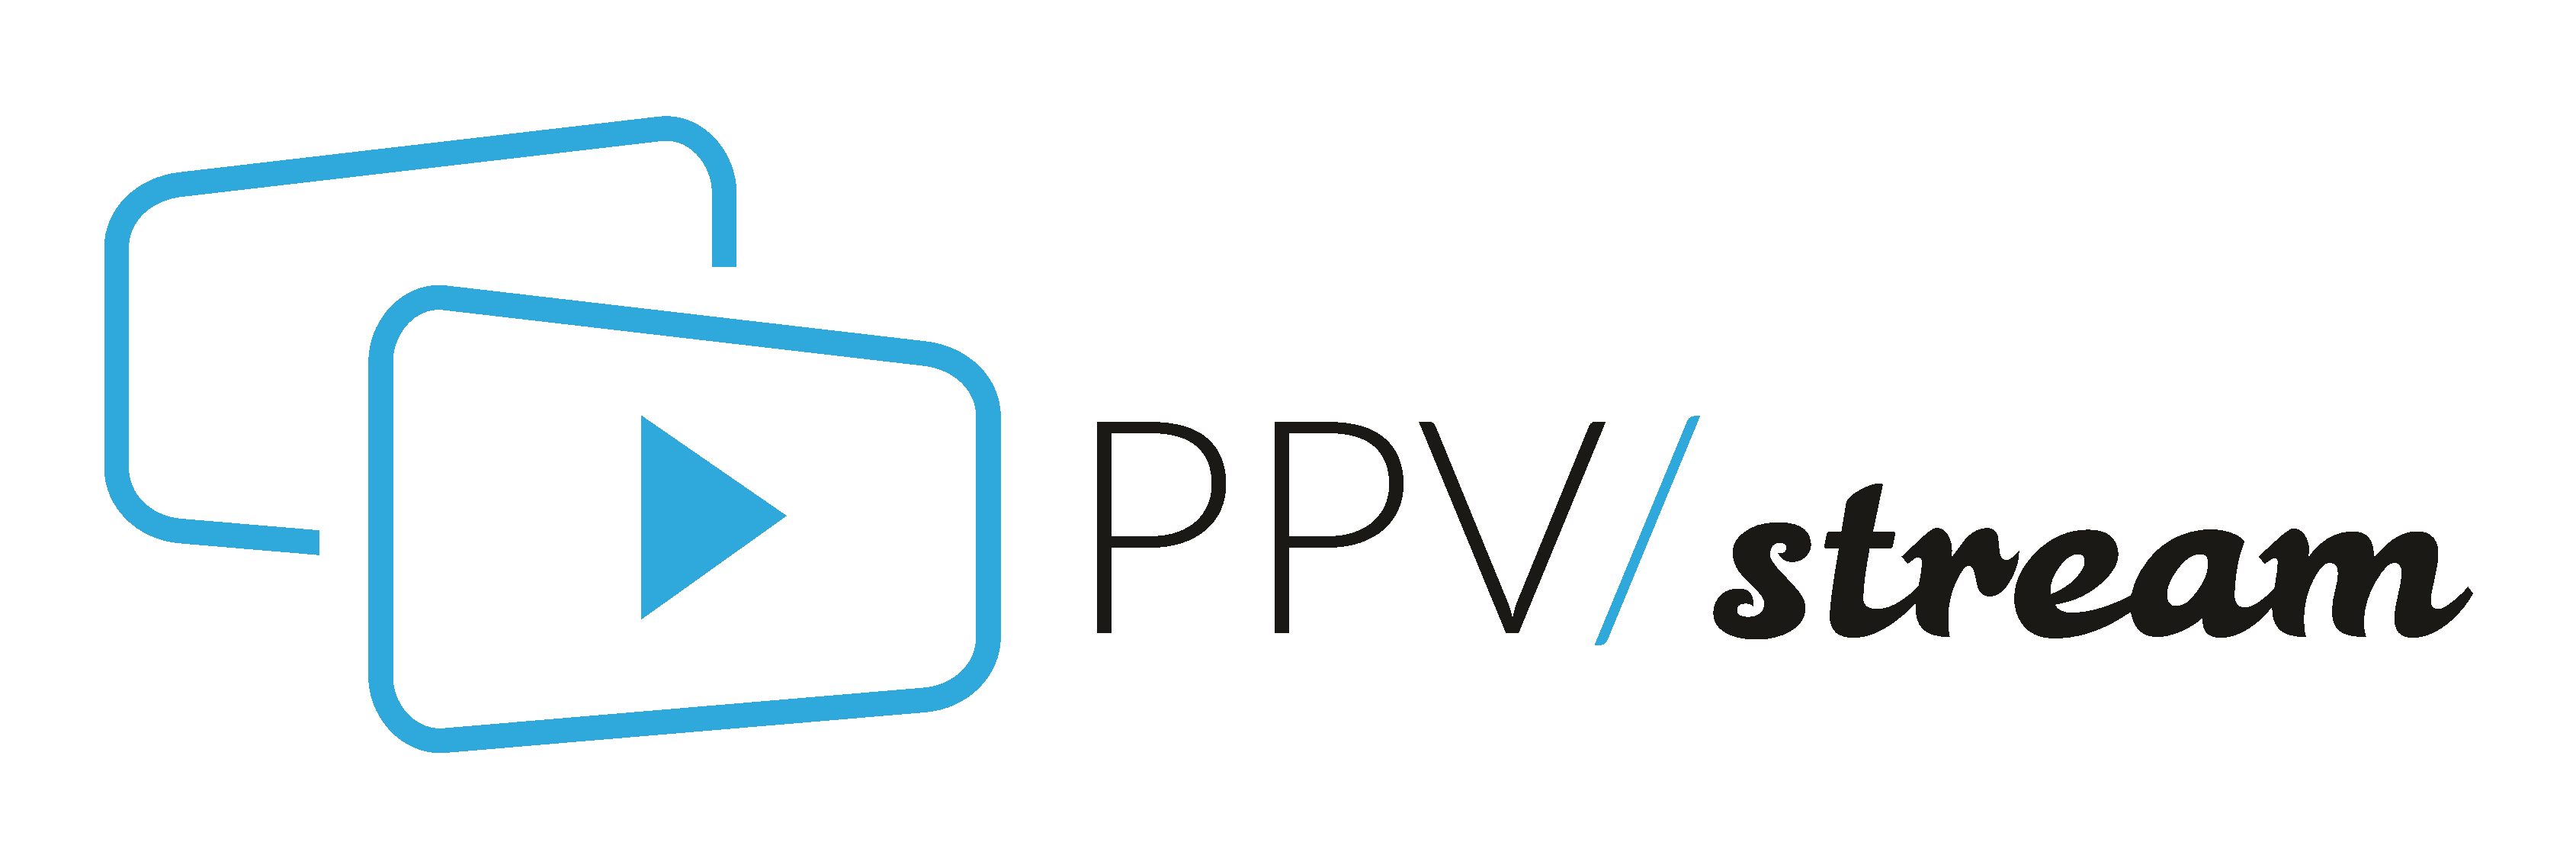 PPV Streame